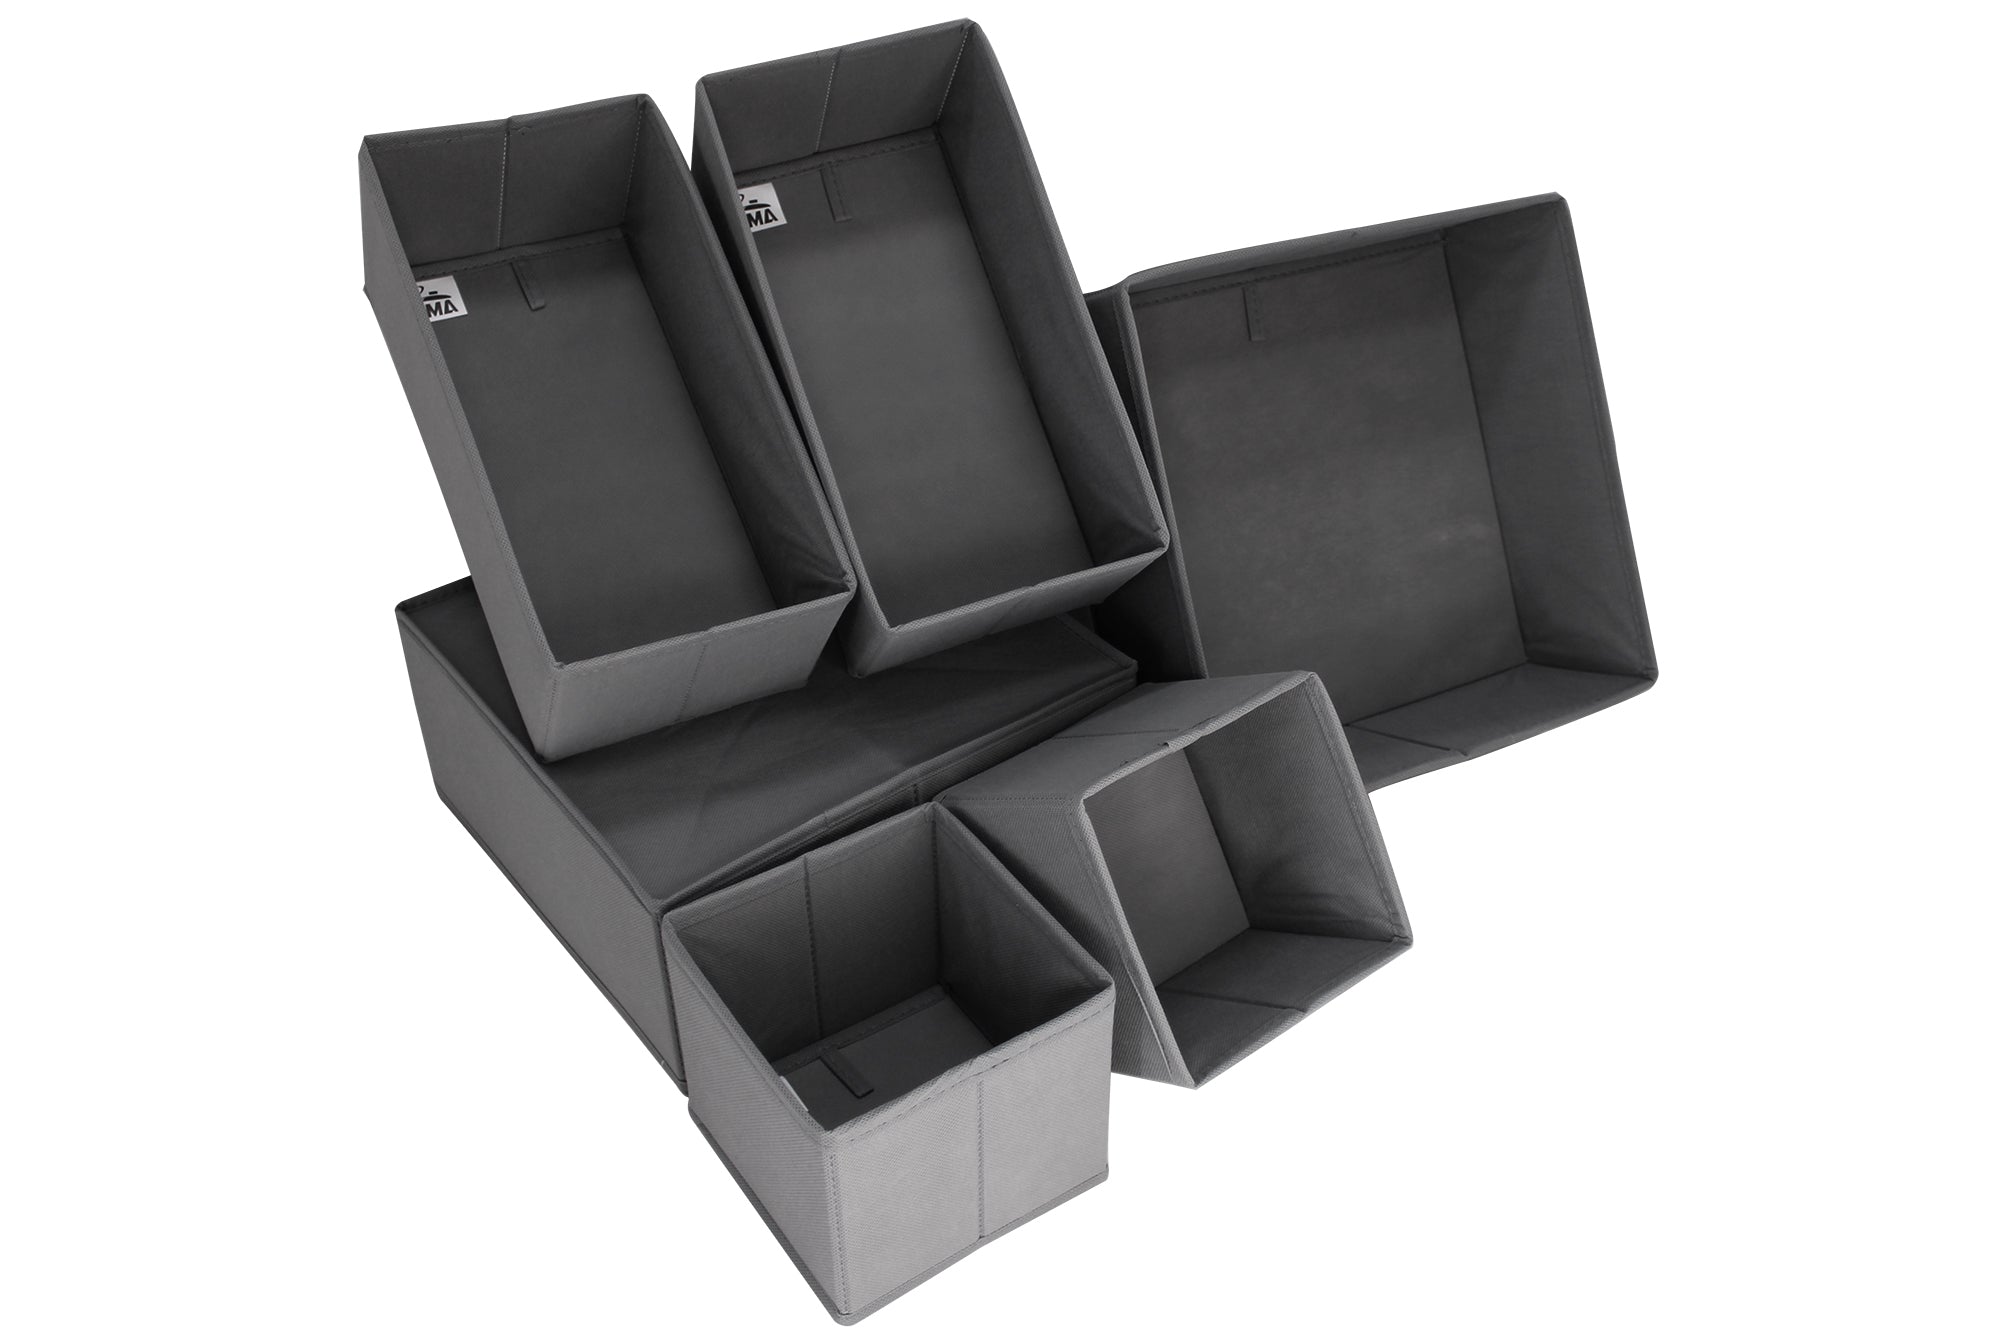 LMA 6 Piece Multipurpose Collapsible Cloth Storage Organizers - Grey